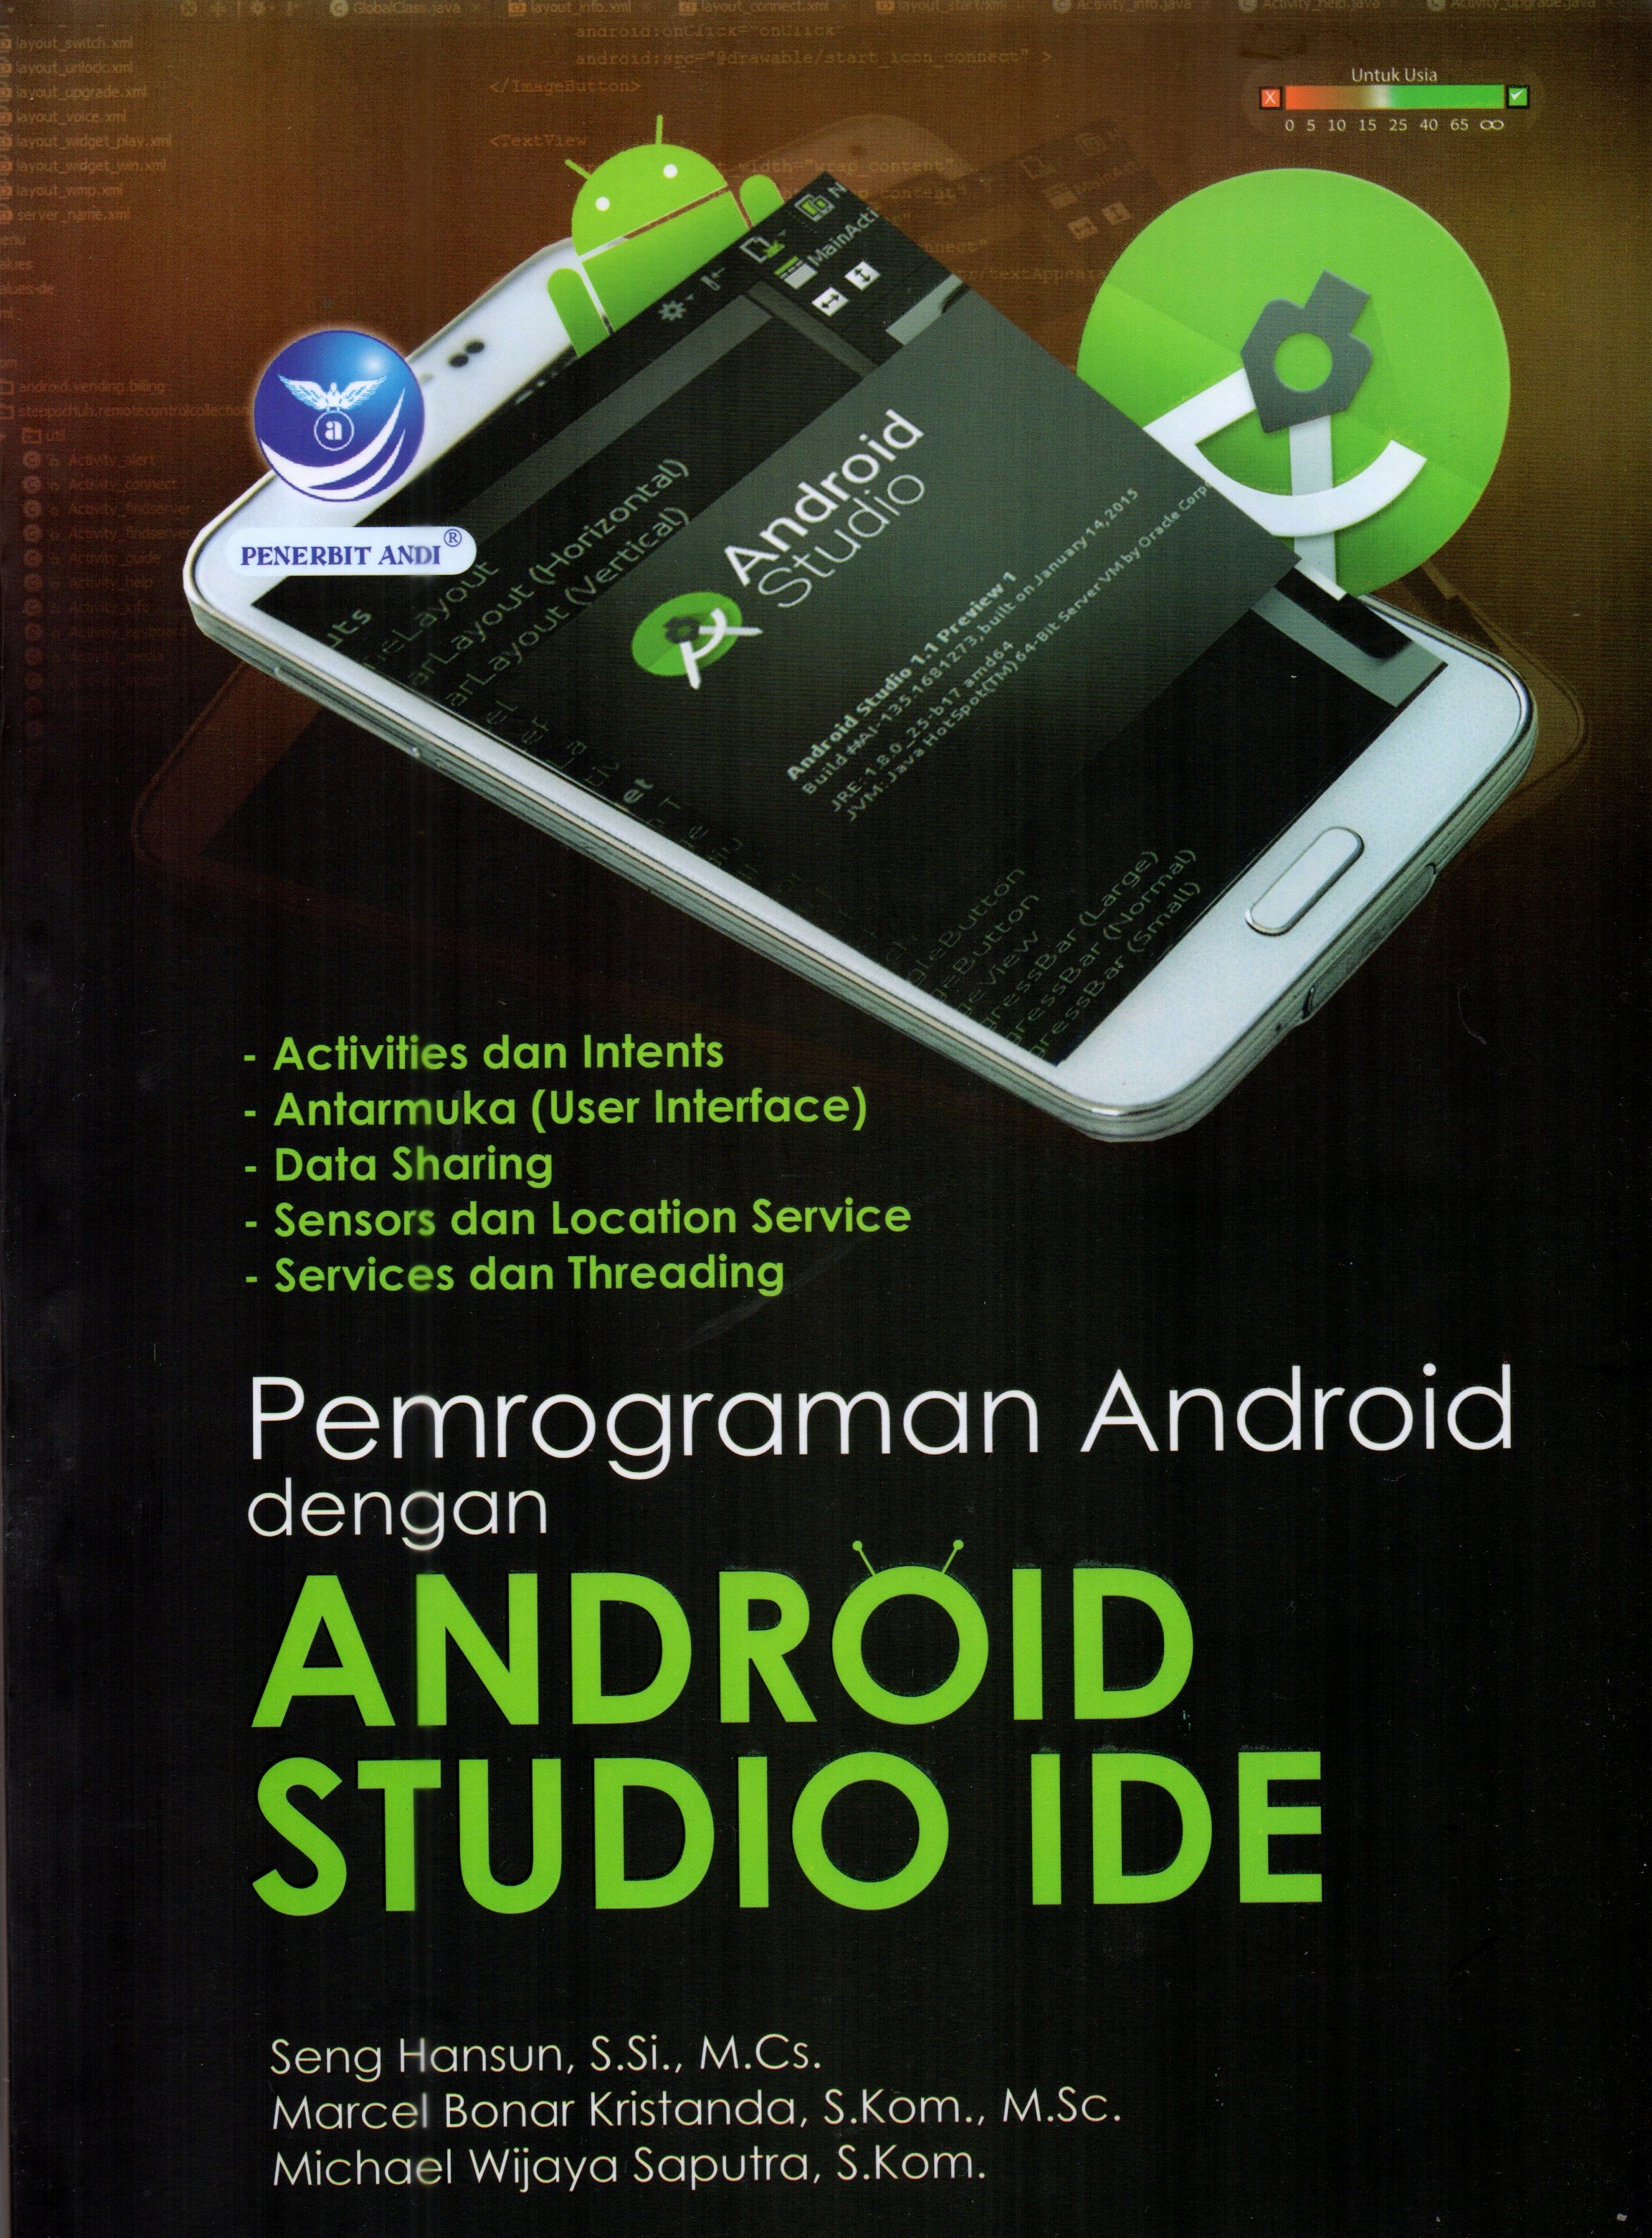 Buku Pemrograman Android Dengan Android Studio IDE – Endang Cahya Permana